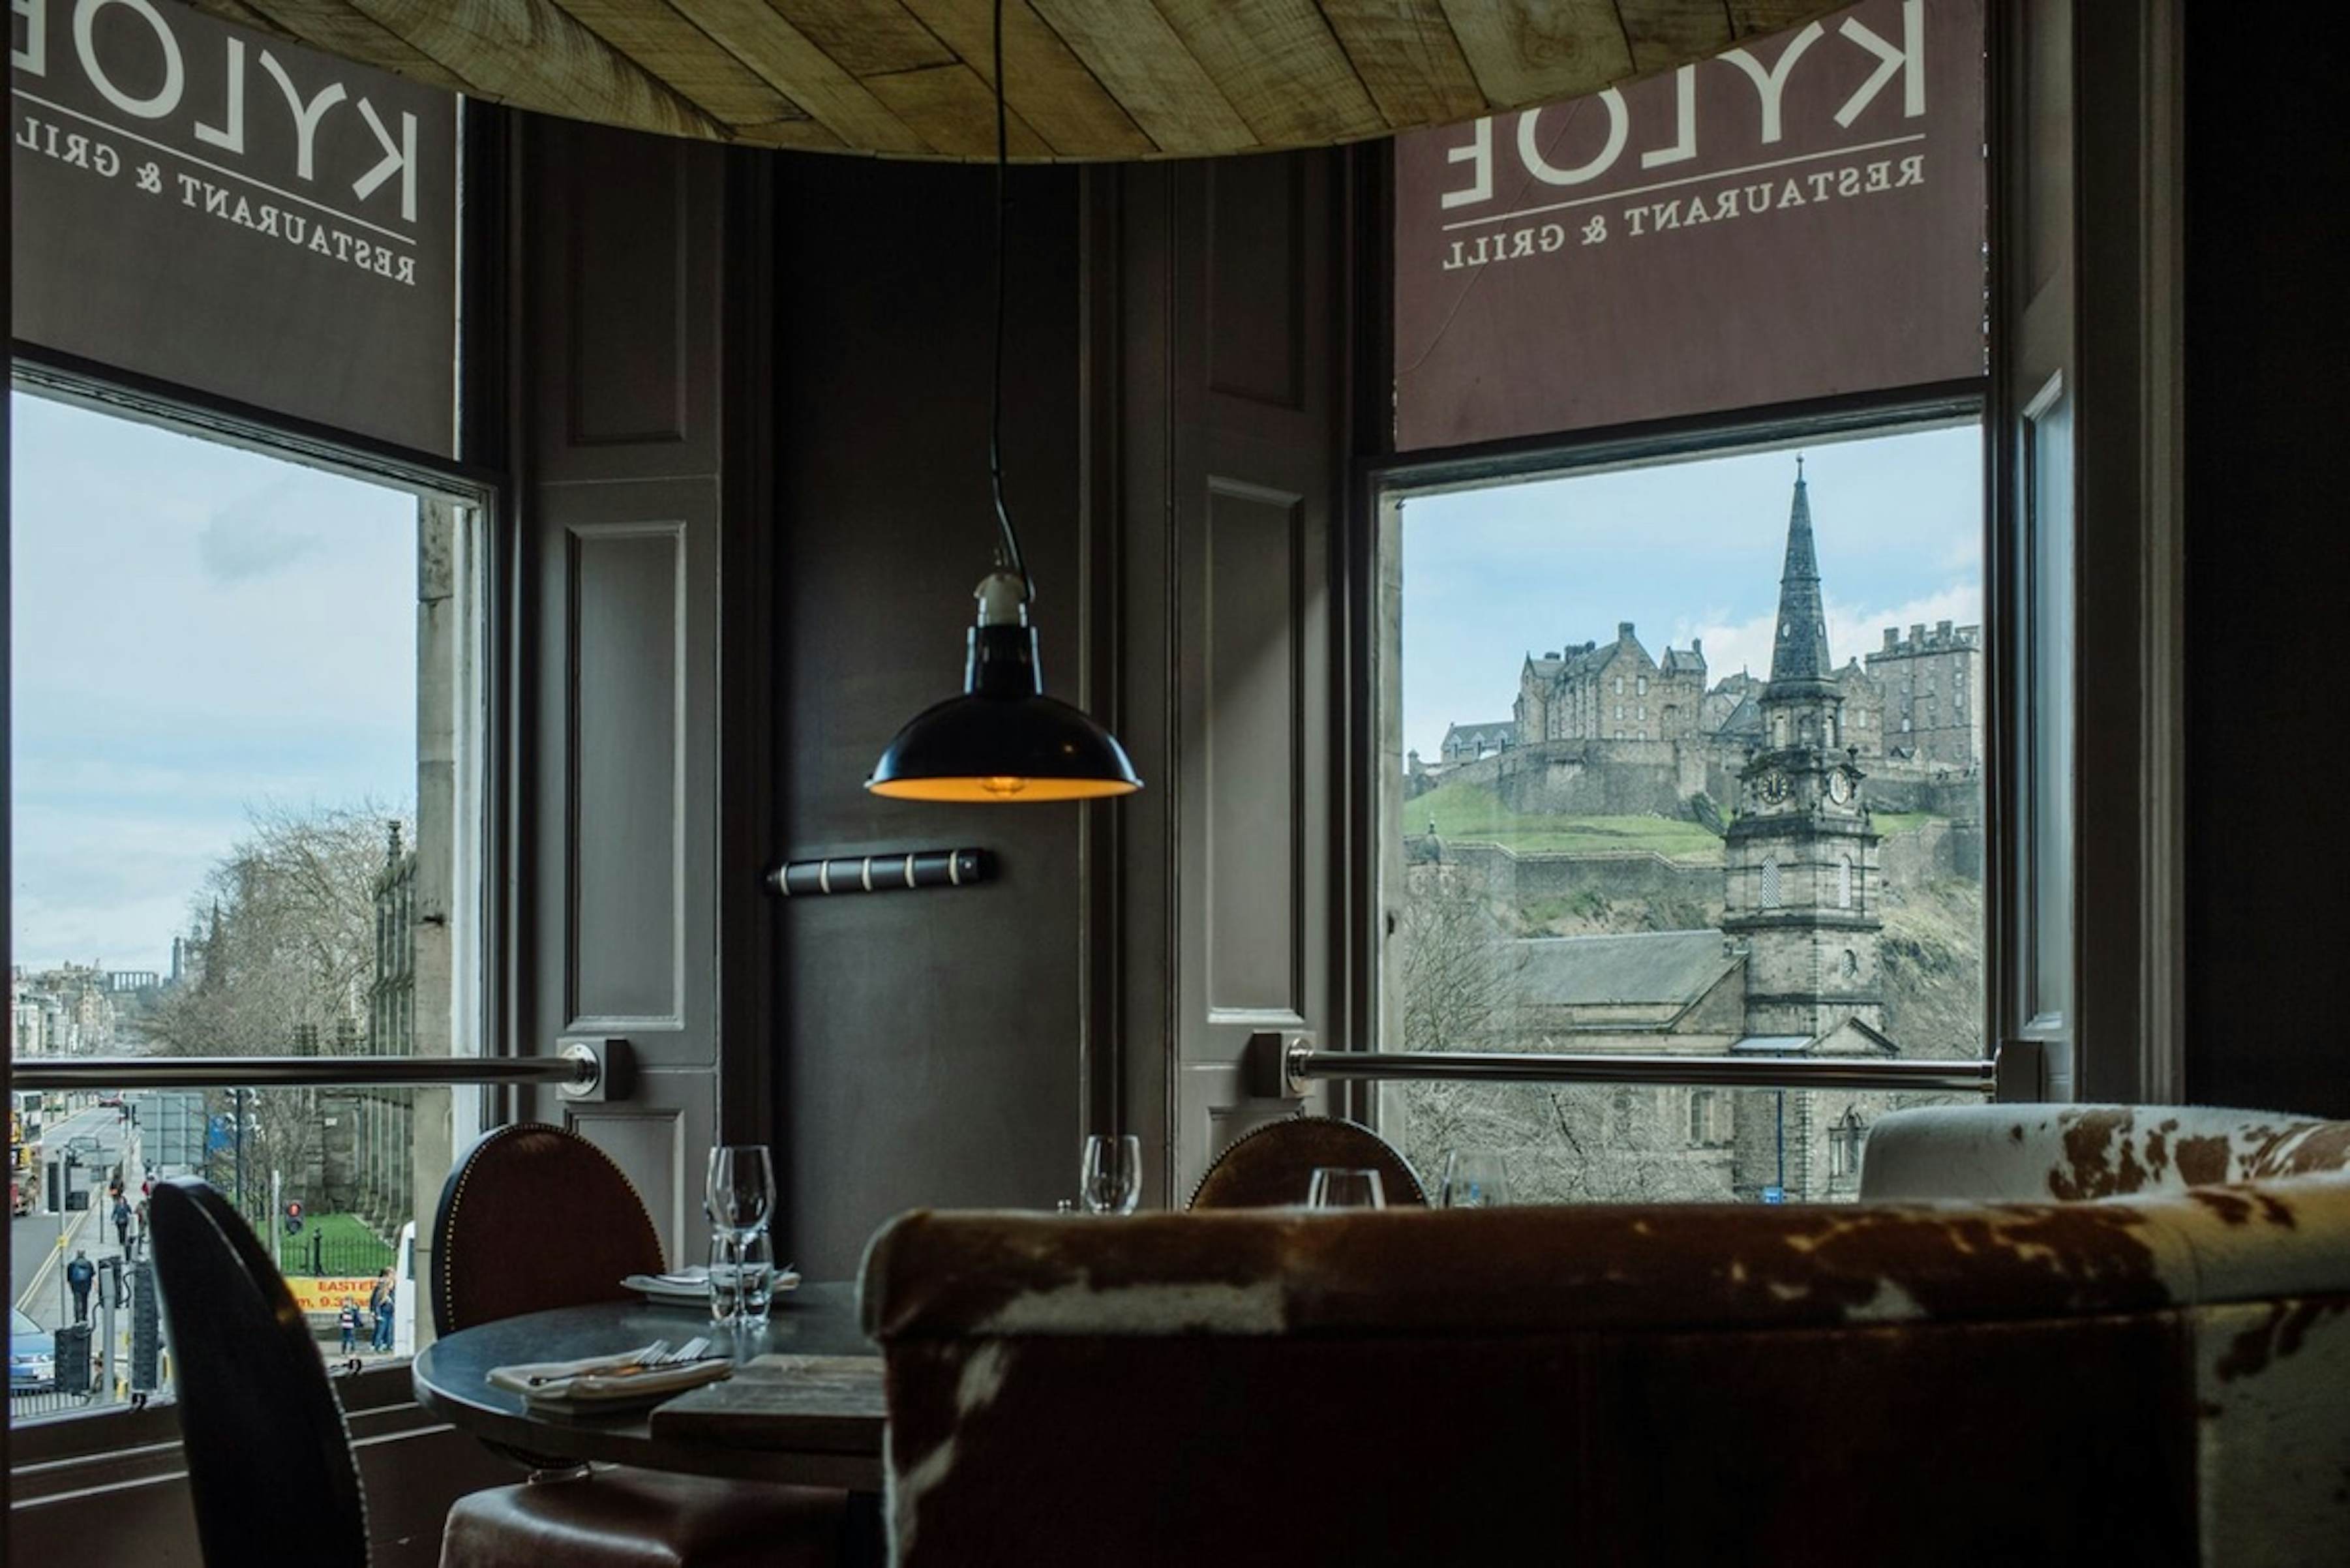 Kyloe, Edinburgh - Restaurant Bookings ...